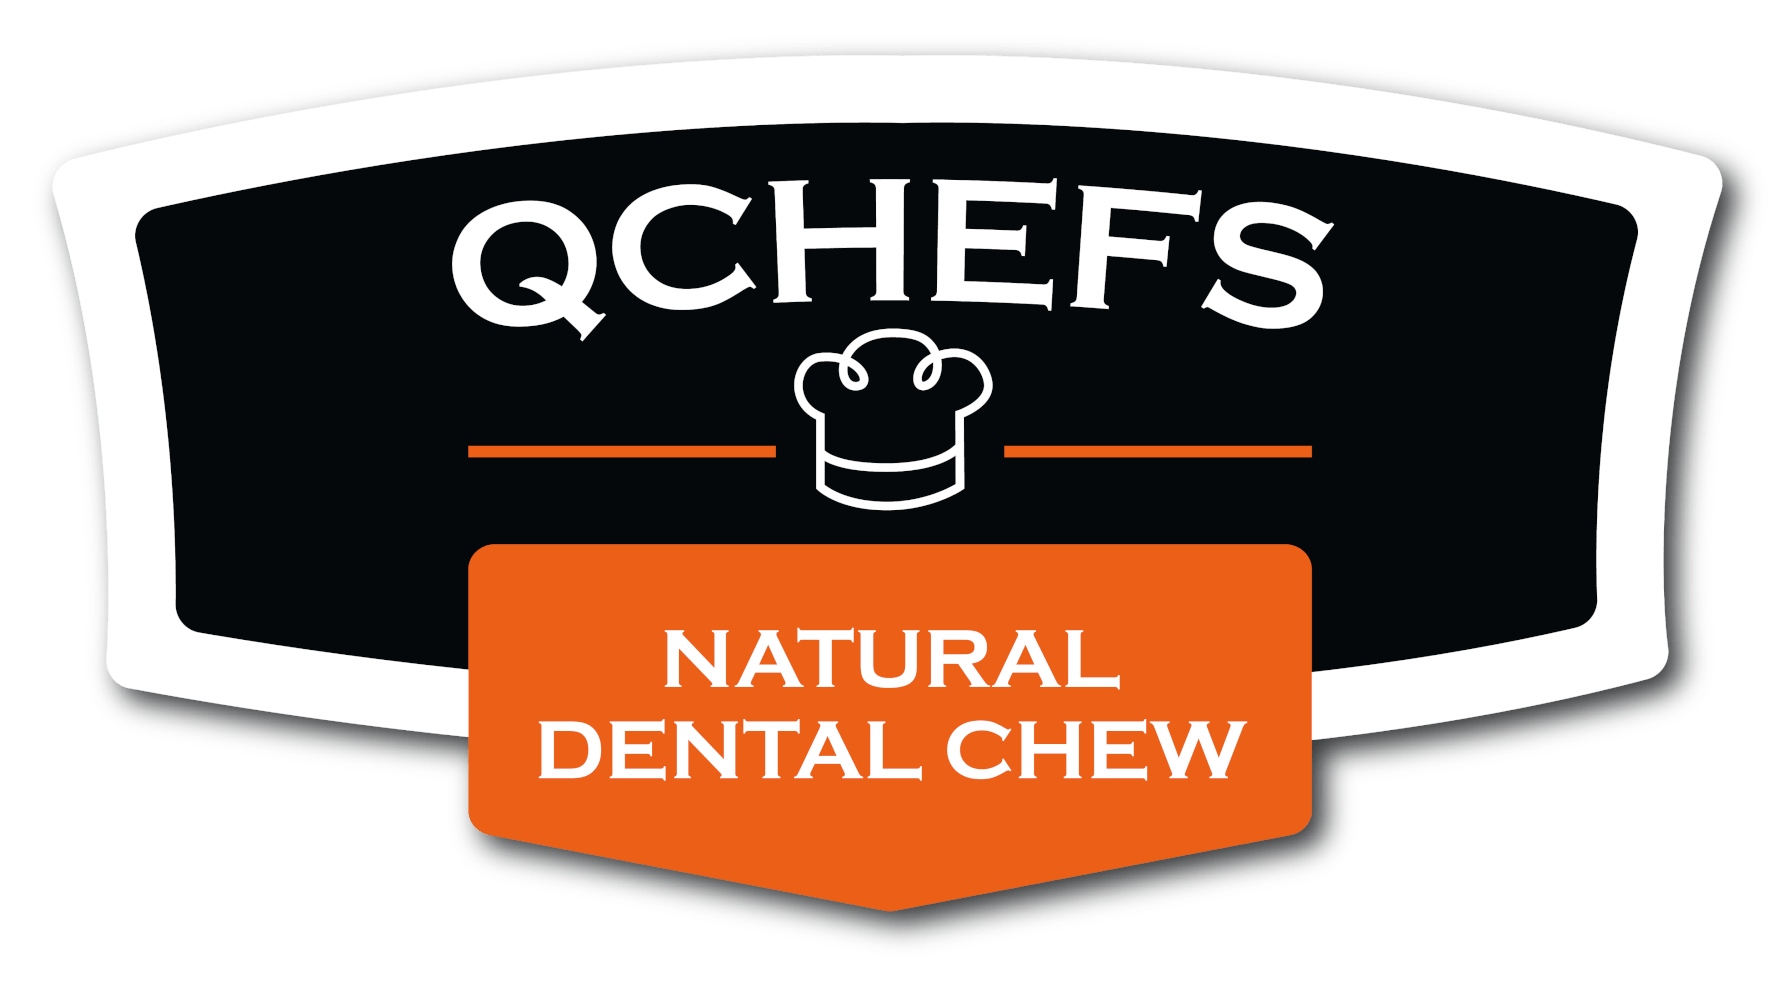 Q Chefs Dental